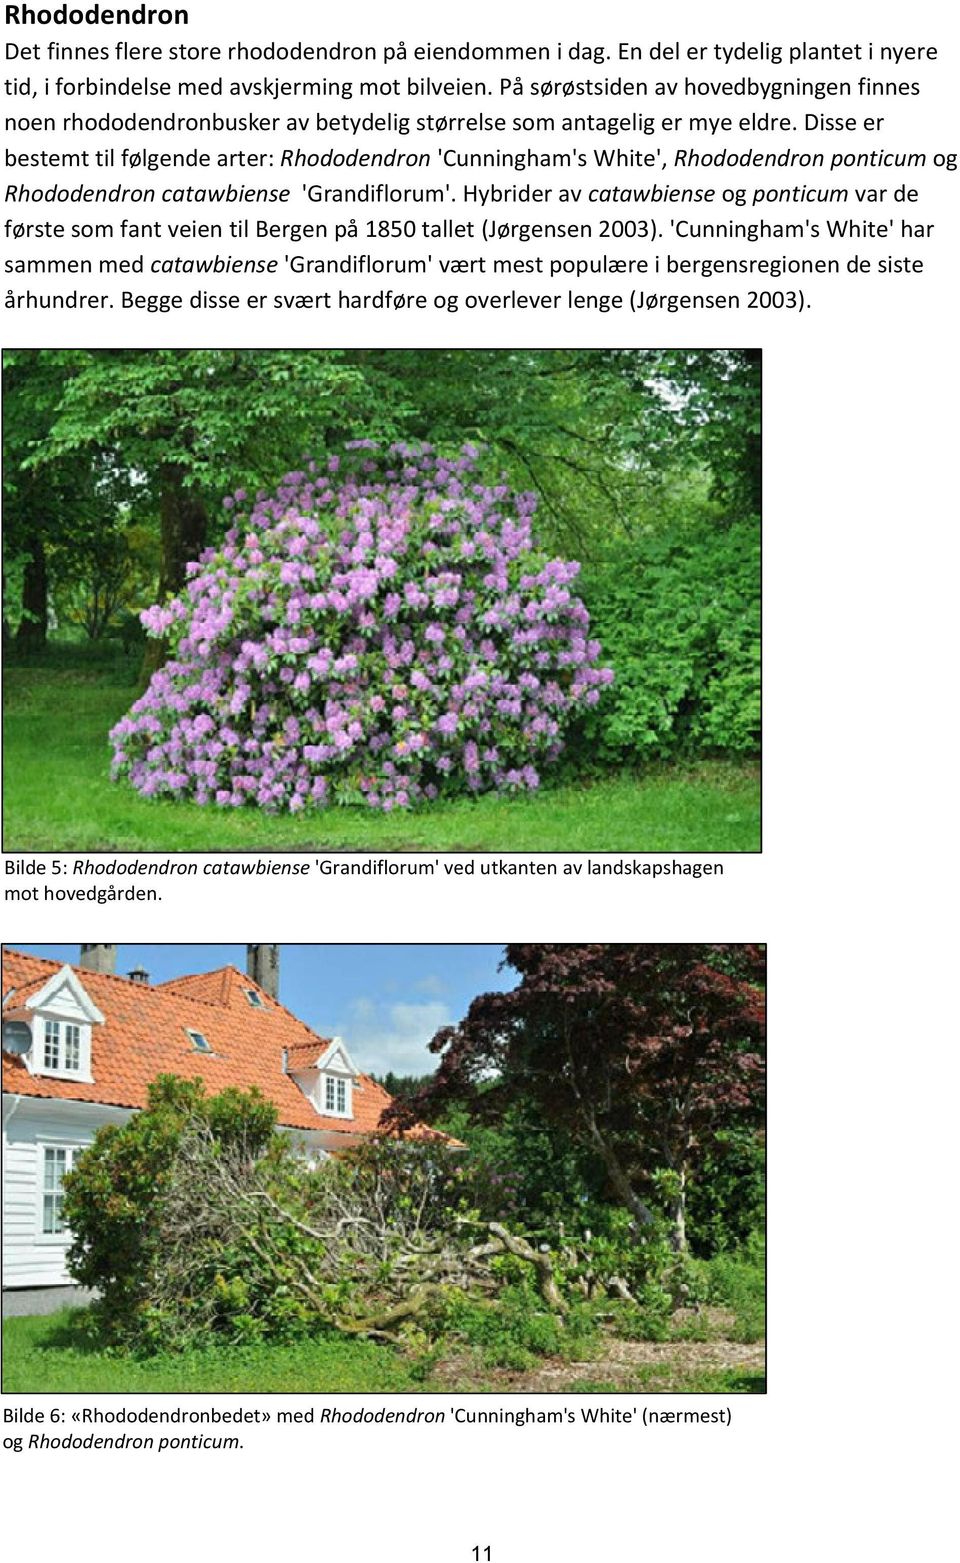 Disse er bestemt til følgende arter: Rhododendron 'Cunningham's White', Rhododendron ponticum og Rhododendron catawbiense 'Grandiflorum'.